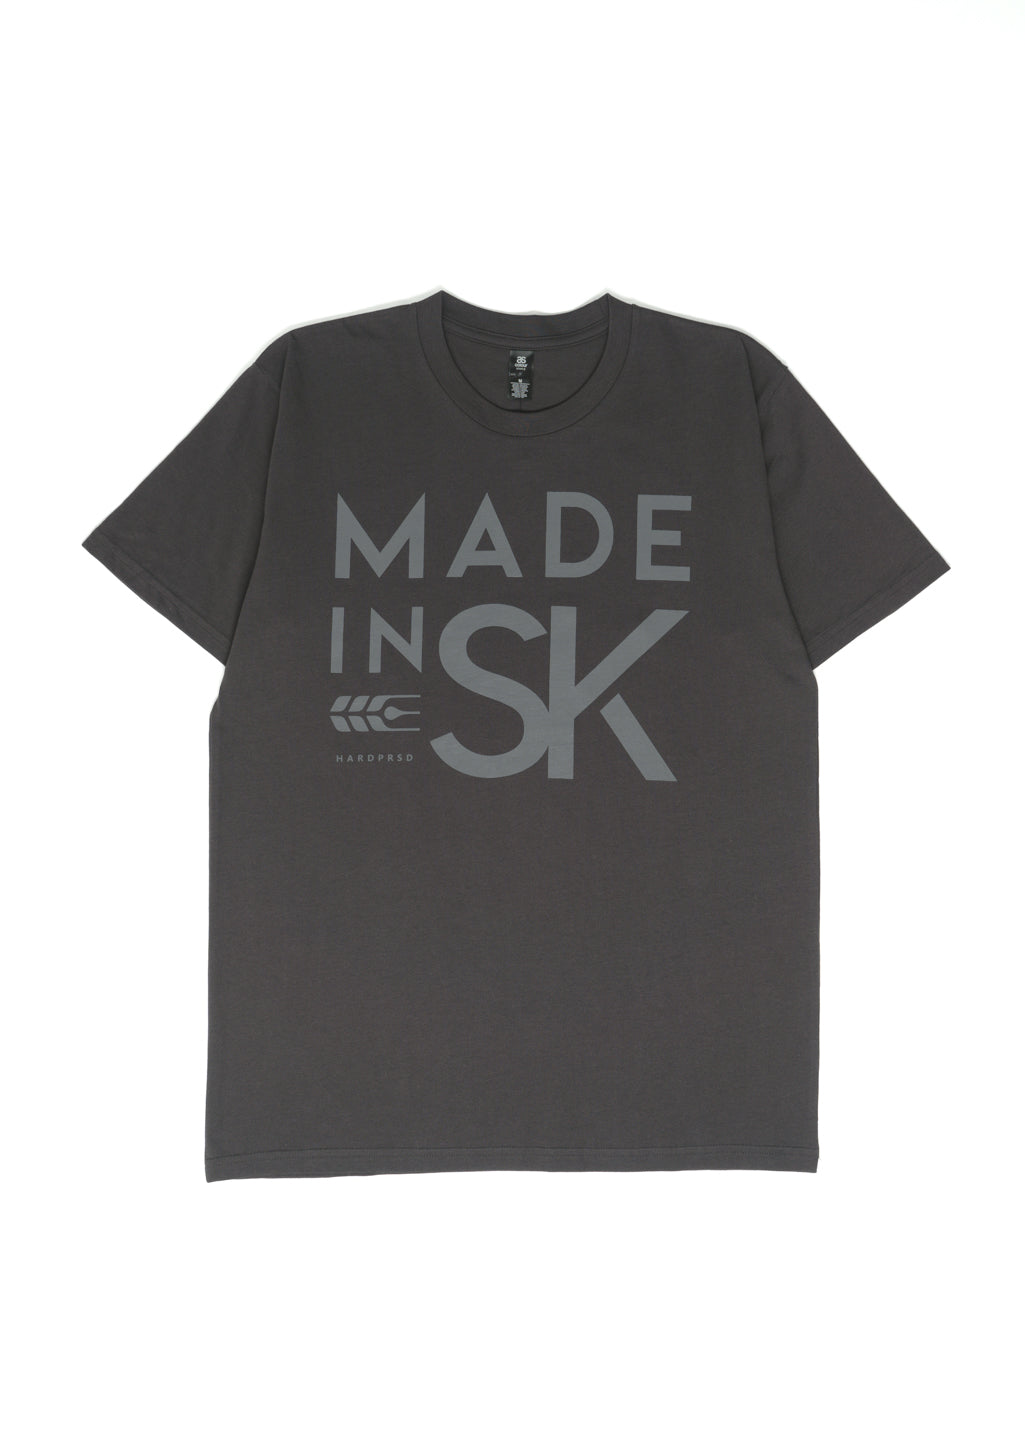 Skid Marks T-Shirts for Sale - Fine Art America